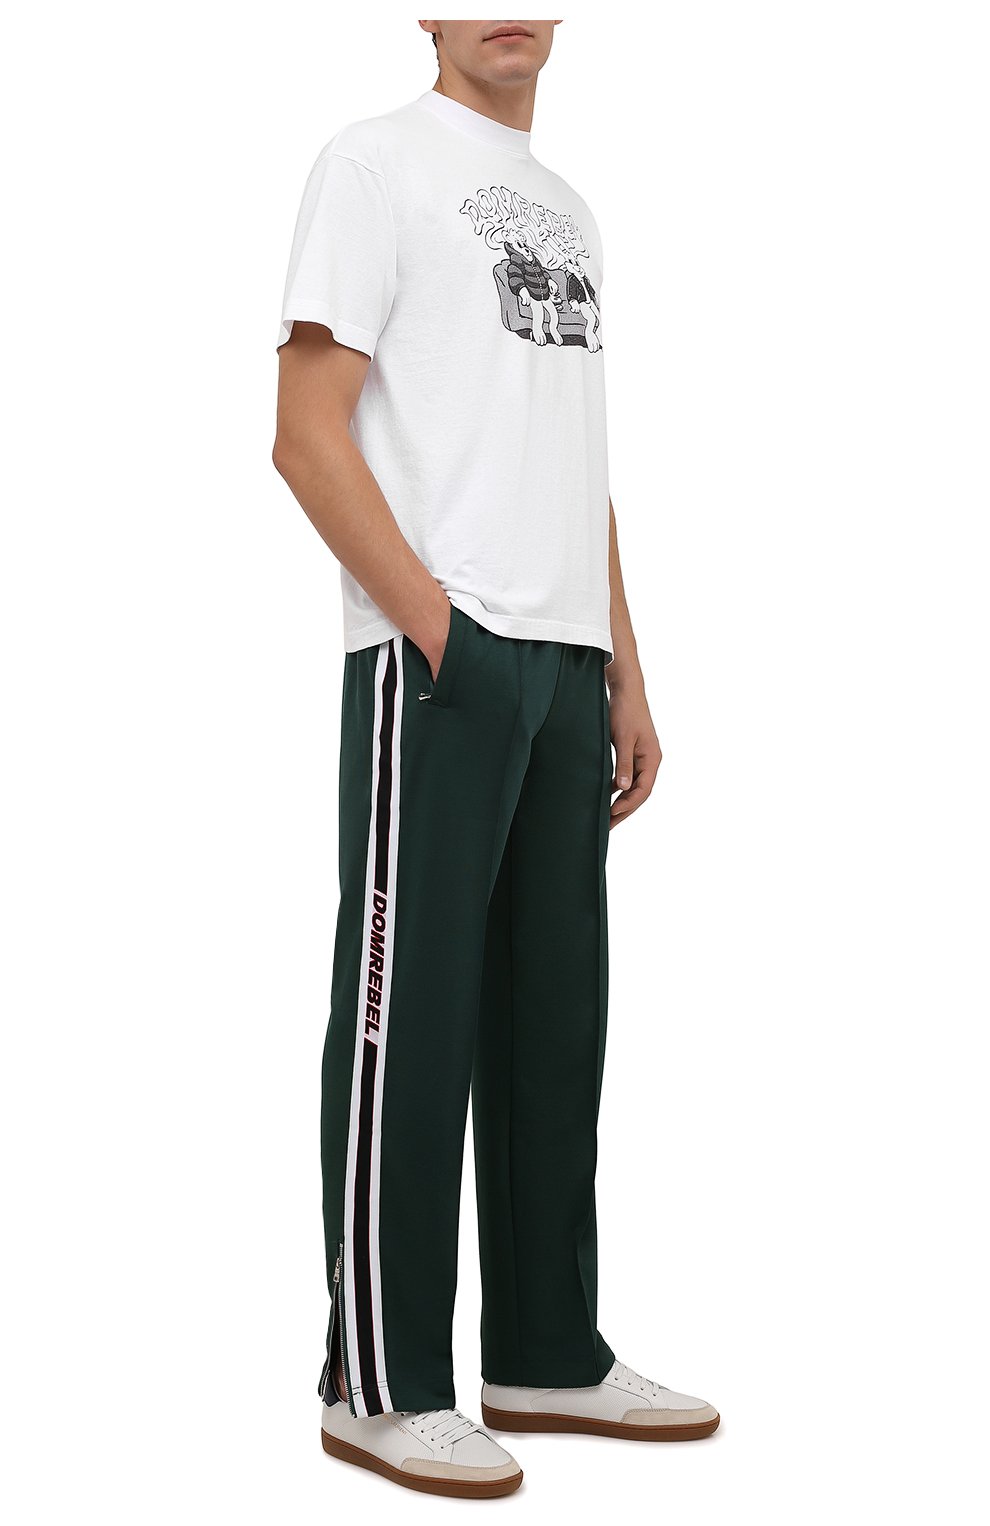 Мужские брюки DOMREBEL зеленого цвета, арт. MPLEATED/TRACK PANTS | Фото 2 (Длина (брюки, джинсы): Стандартные; Случай: Повседневный; Материал внешний: Синтетический материал; Стили: Спорт-шик)